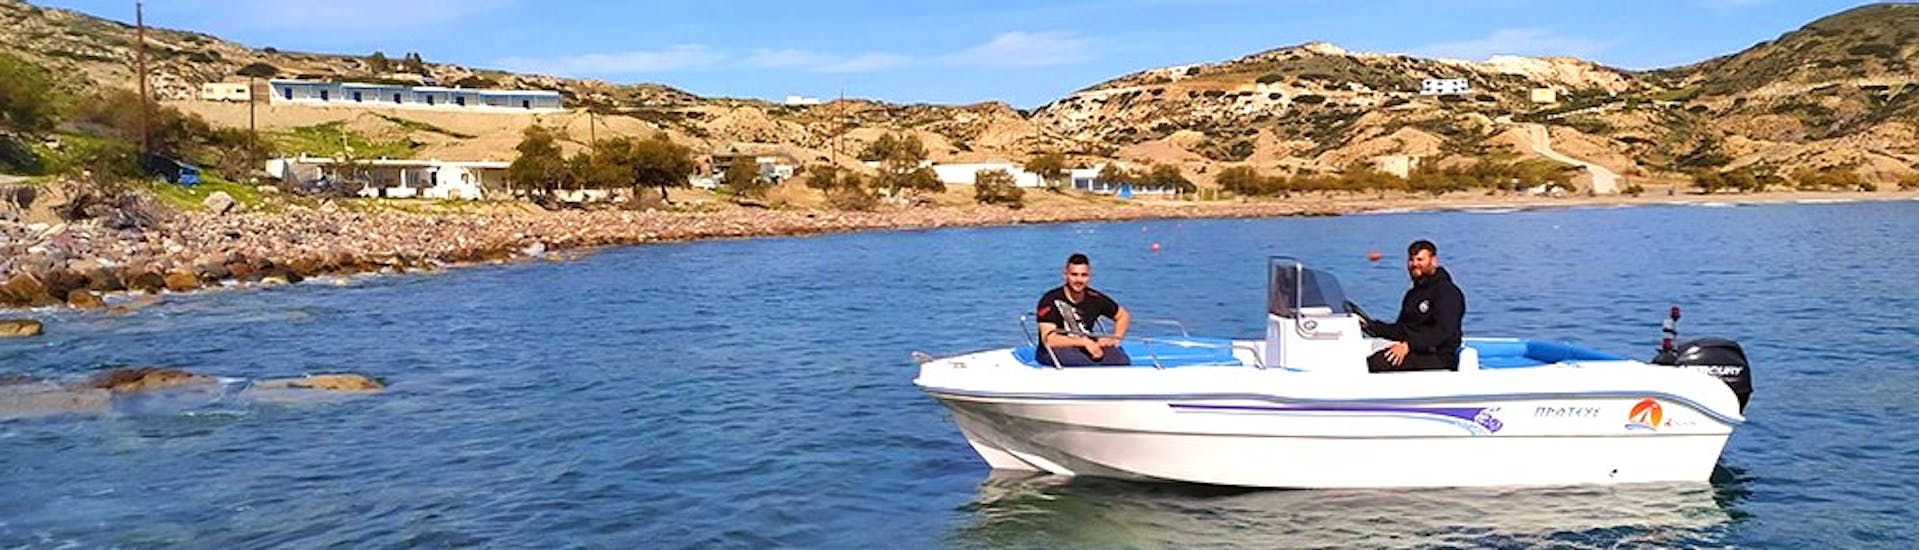 Two men enjoying the boat rental in Agia Kiriaki (up to 6 people) with Indigo Yacht Milos.